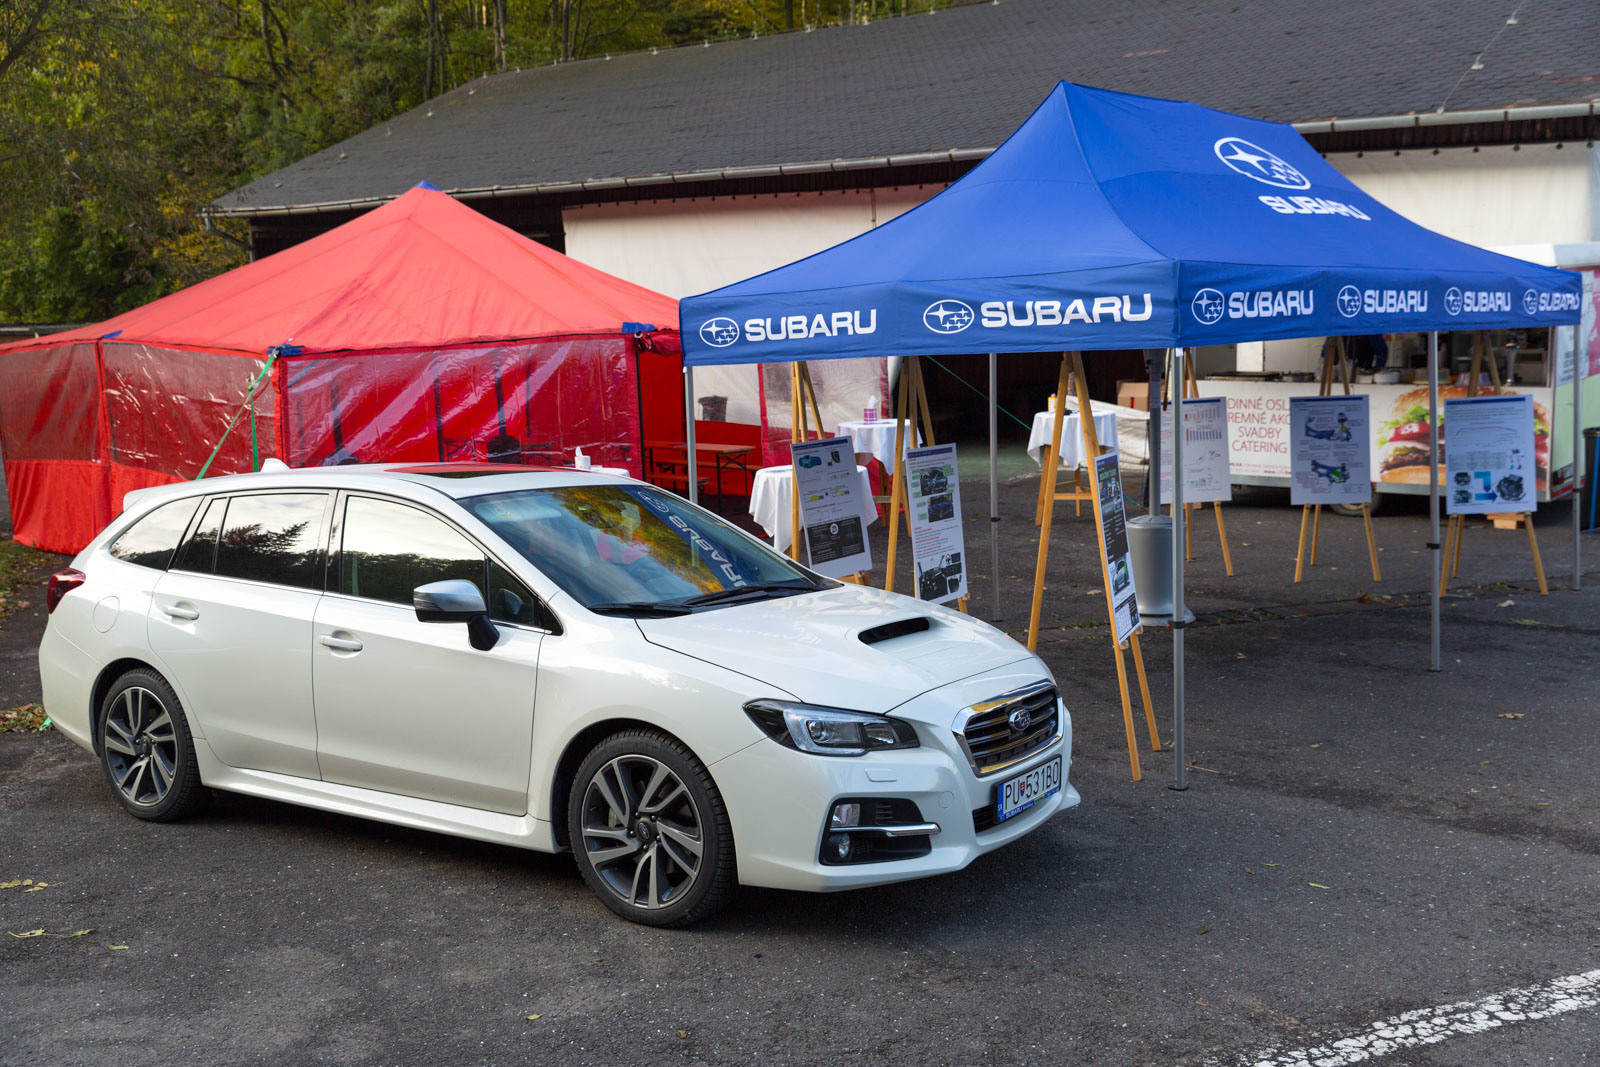 Subaru Dni 2015 Paddock Pezinok